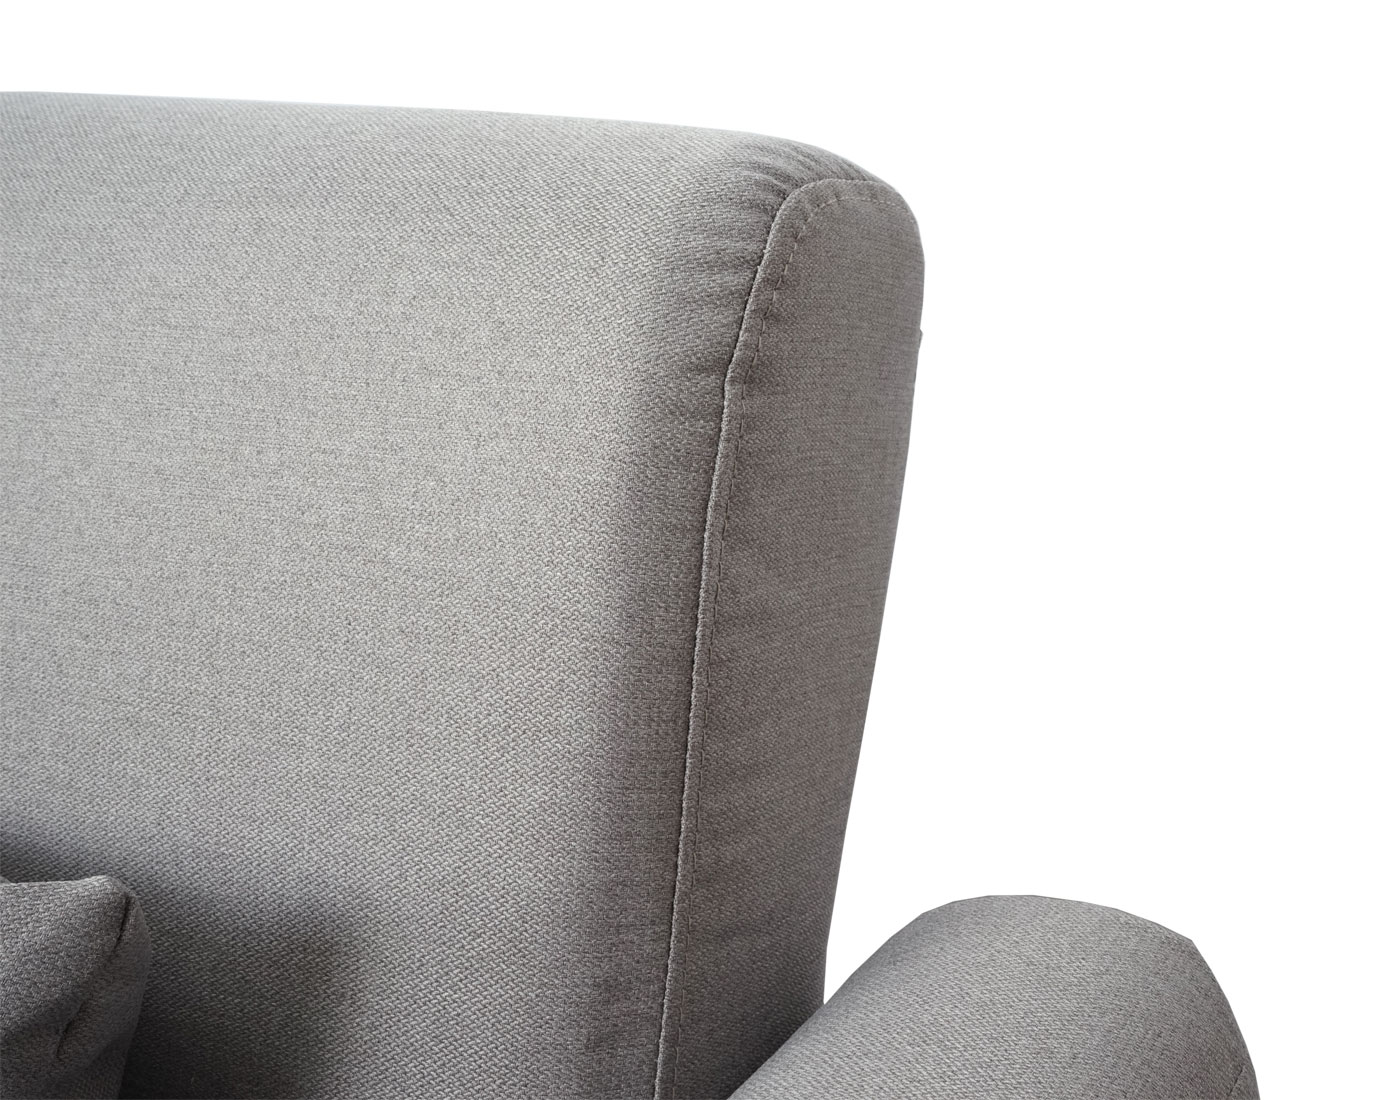 Sofa HWC-J20 Detailbild Rückenlehne